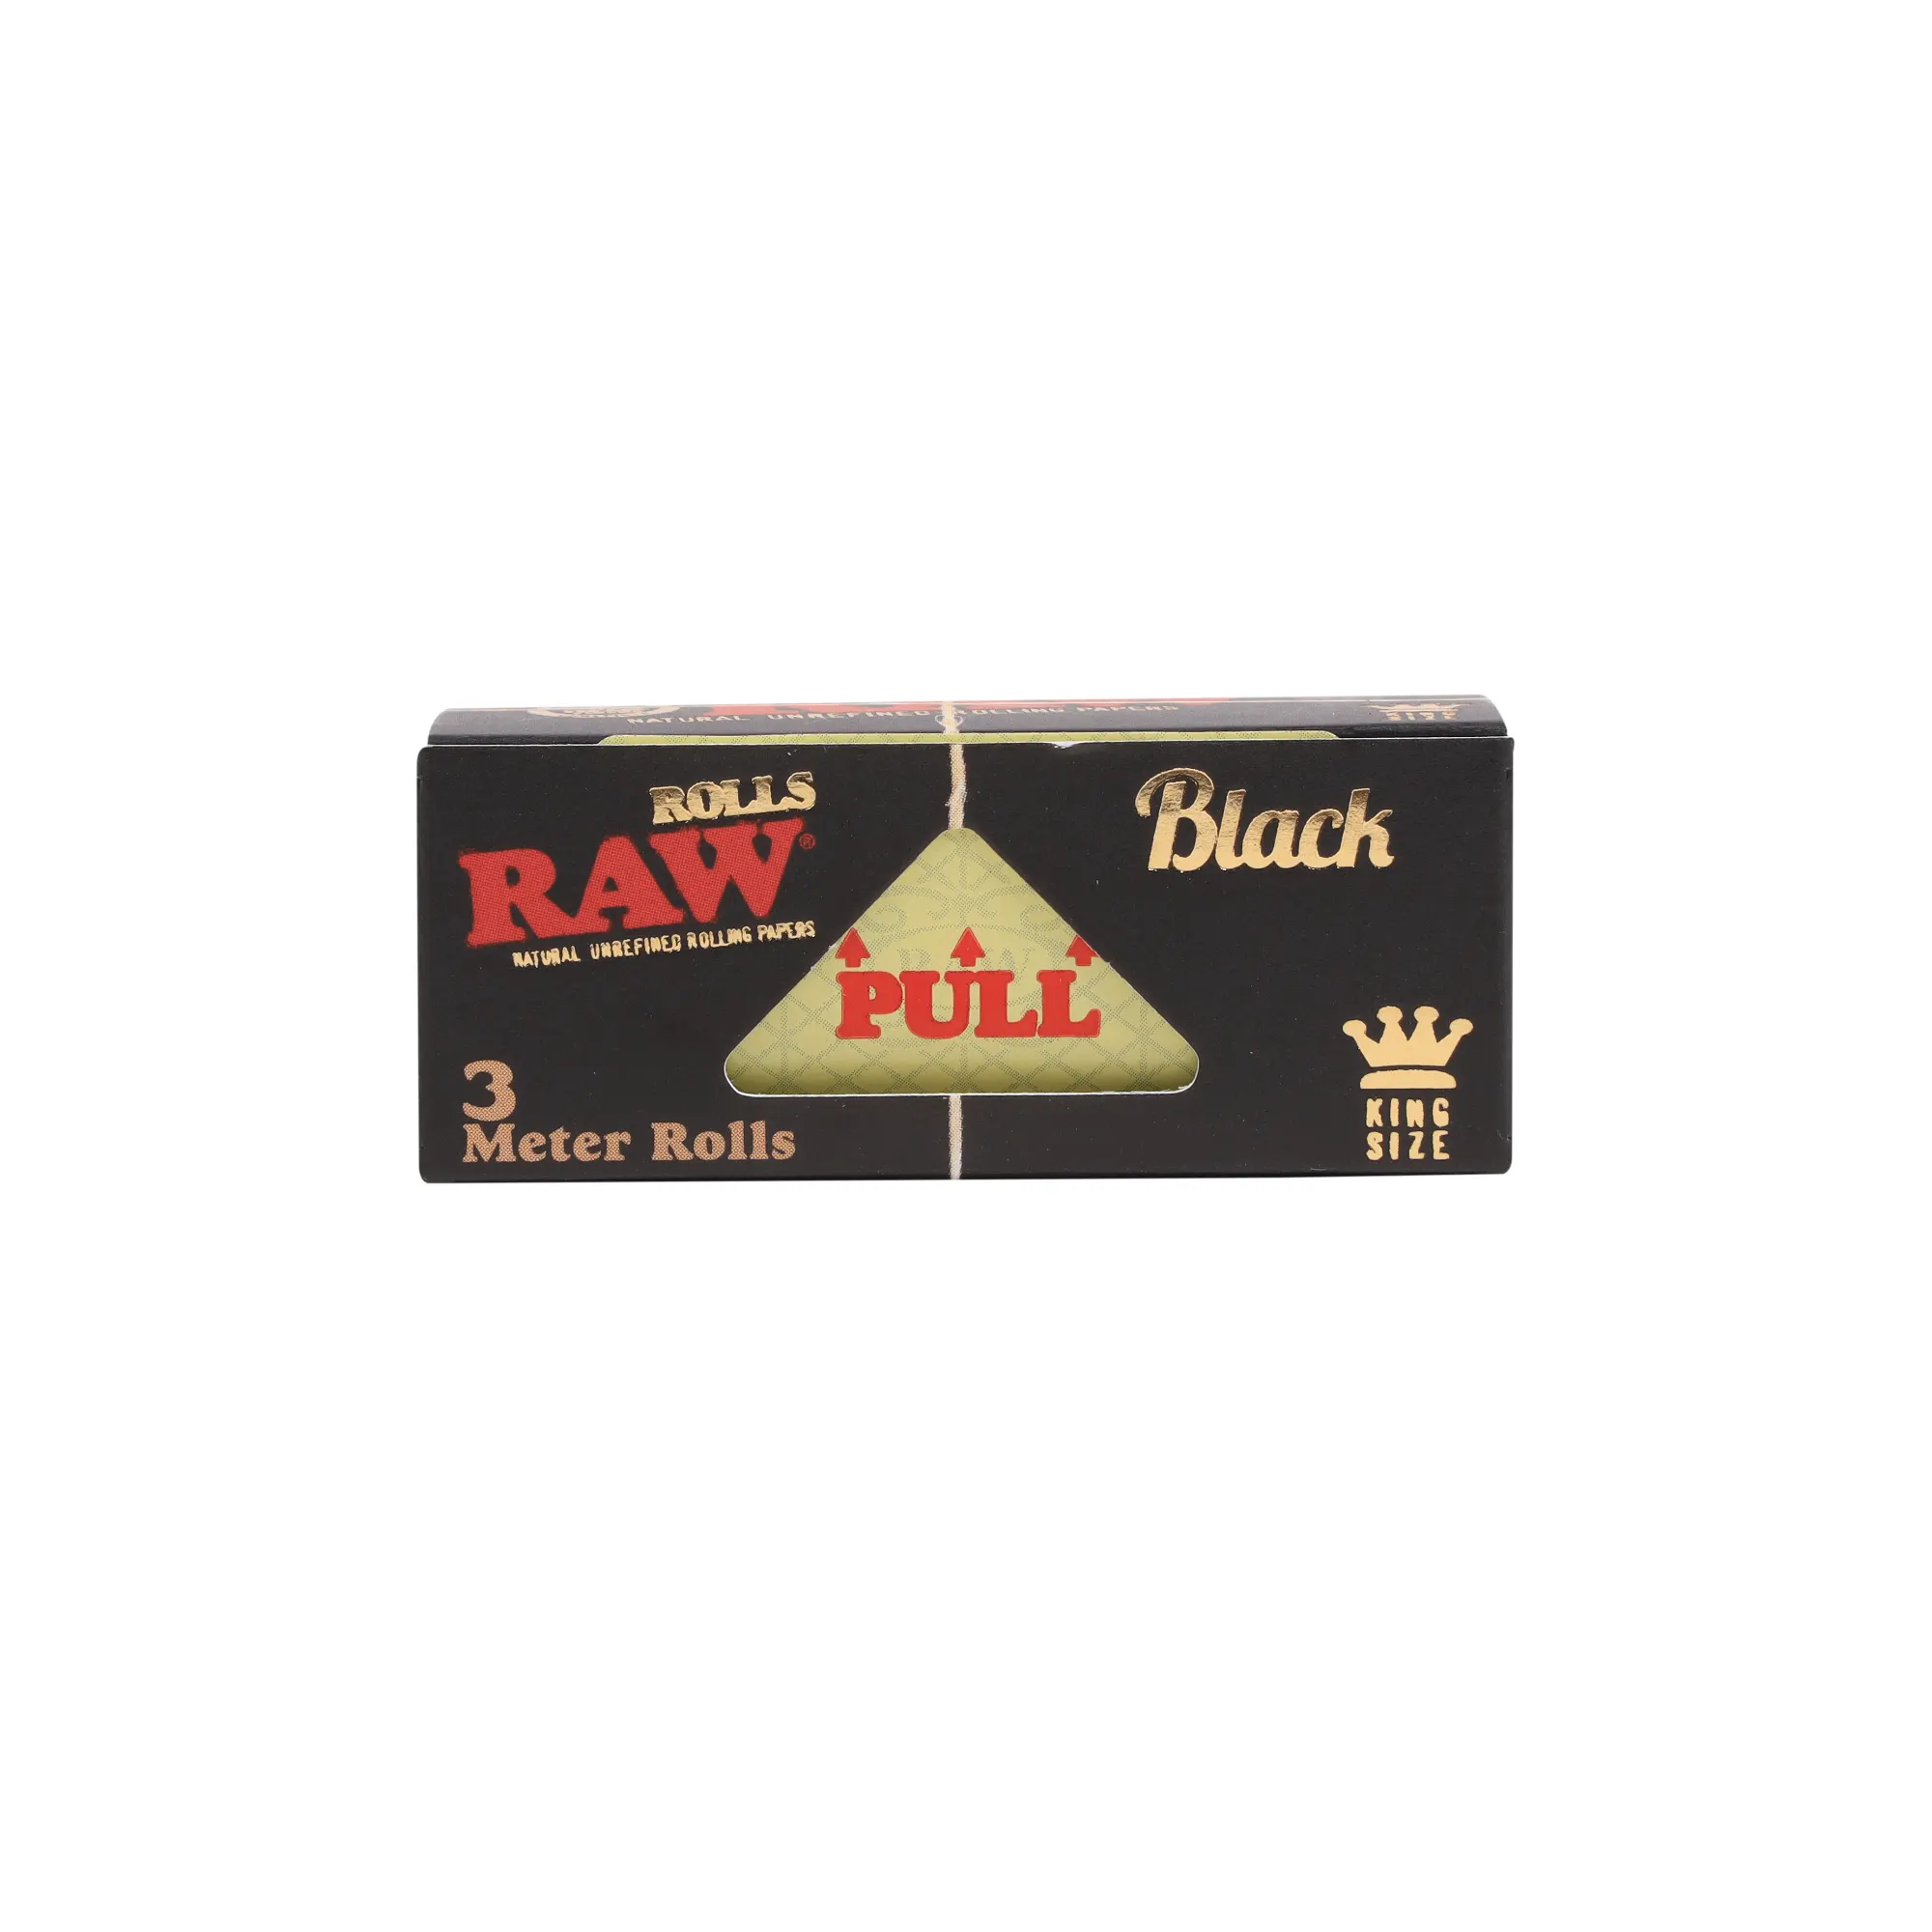 RAW black king size rolls product